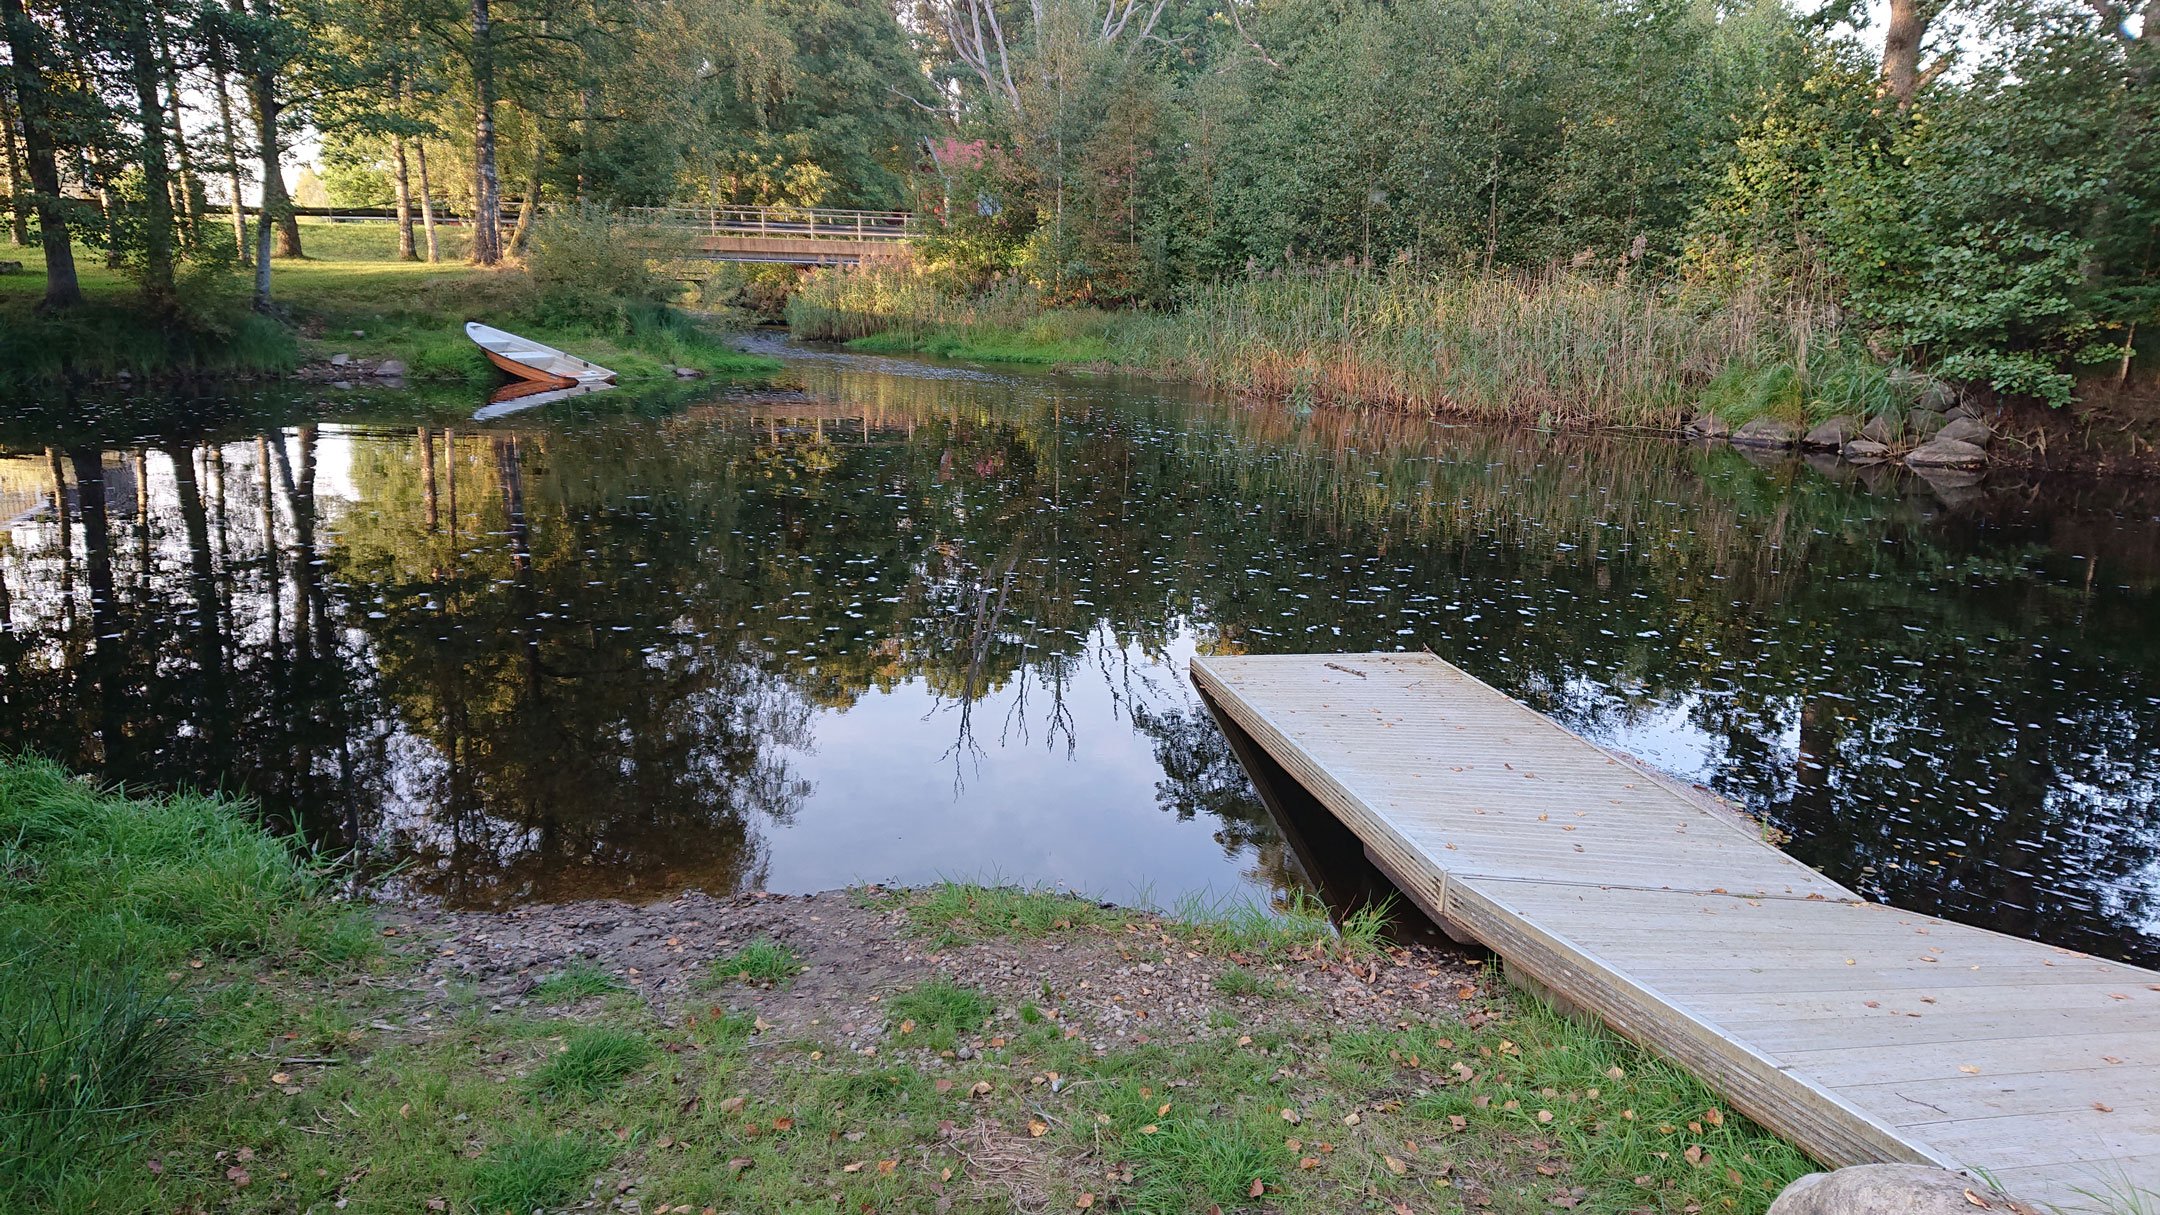 Holmens canoe rest area